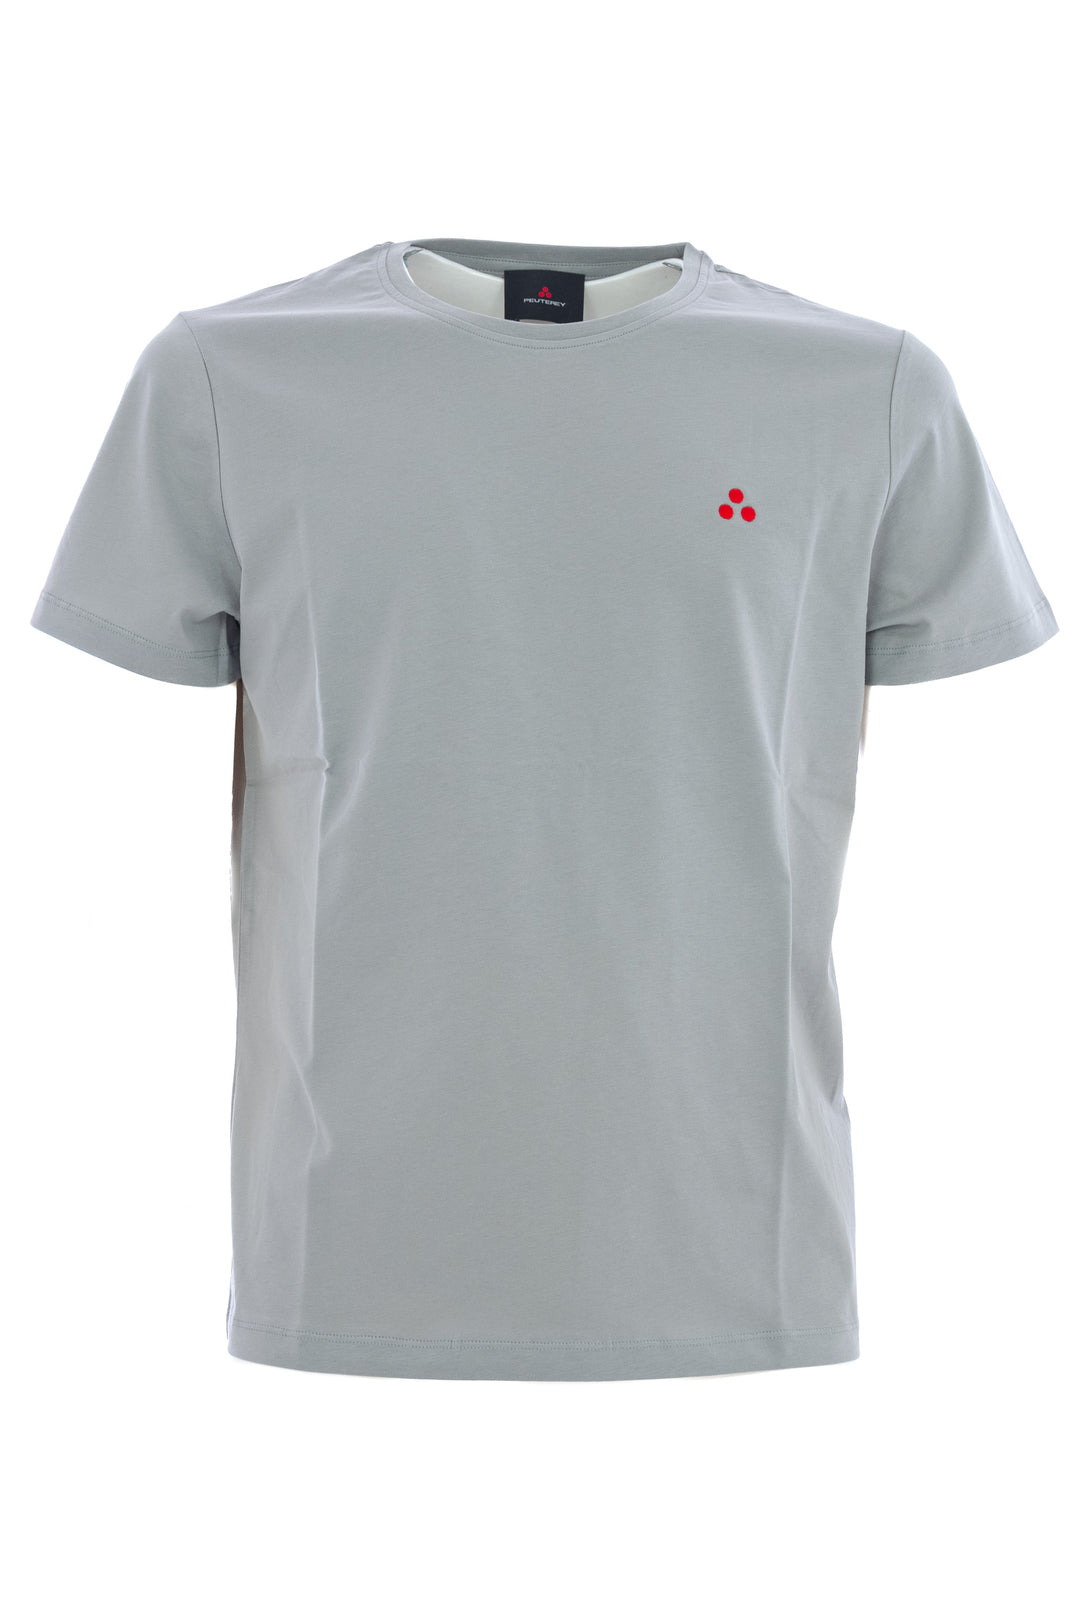 PEUTEREY T-shirt con logo ricamato grigio acciaio - Mancinelli 1954